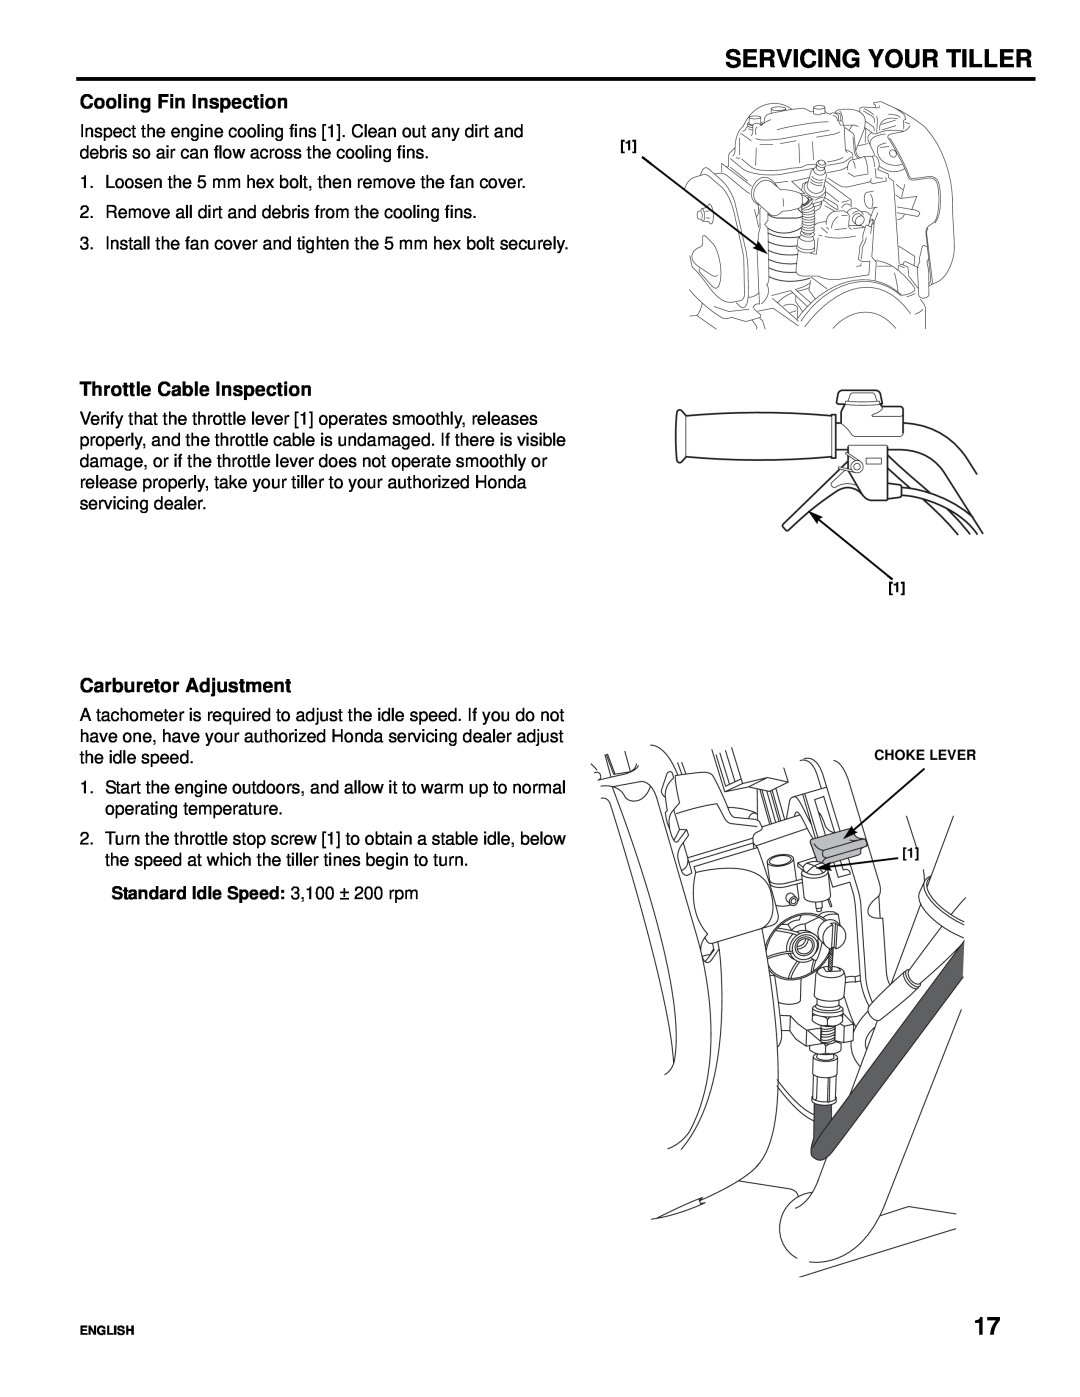 Honda Power Equipment Honda Mini-Tiller, FG110 Cooling Fin Inspection, Throttle Cable Inspection, Carburetor Adjustment 